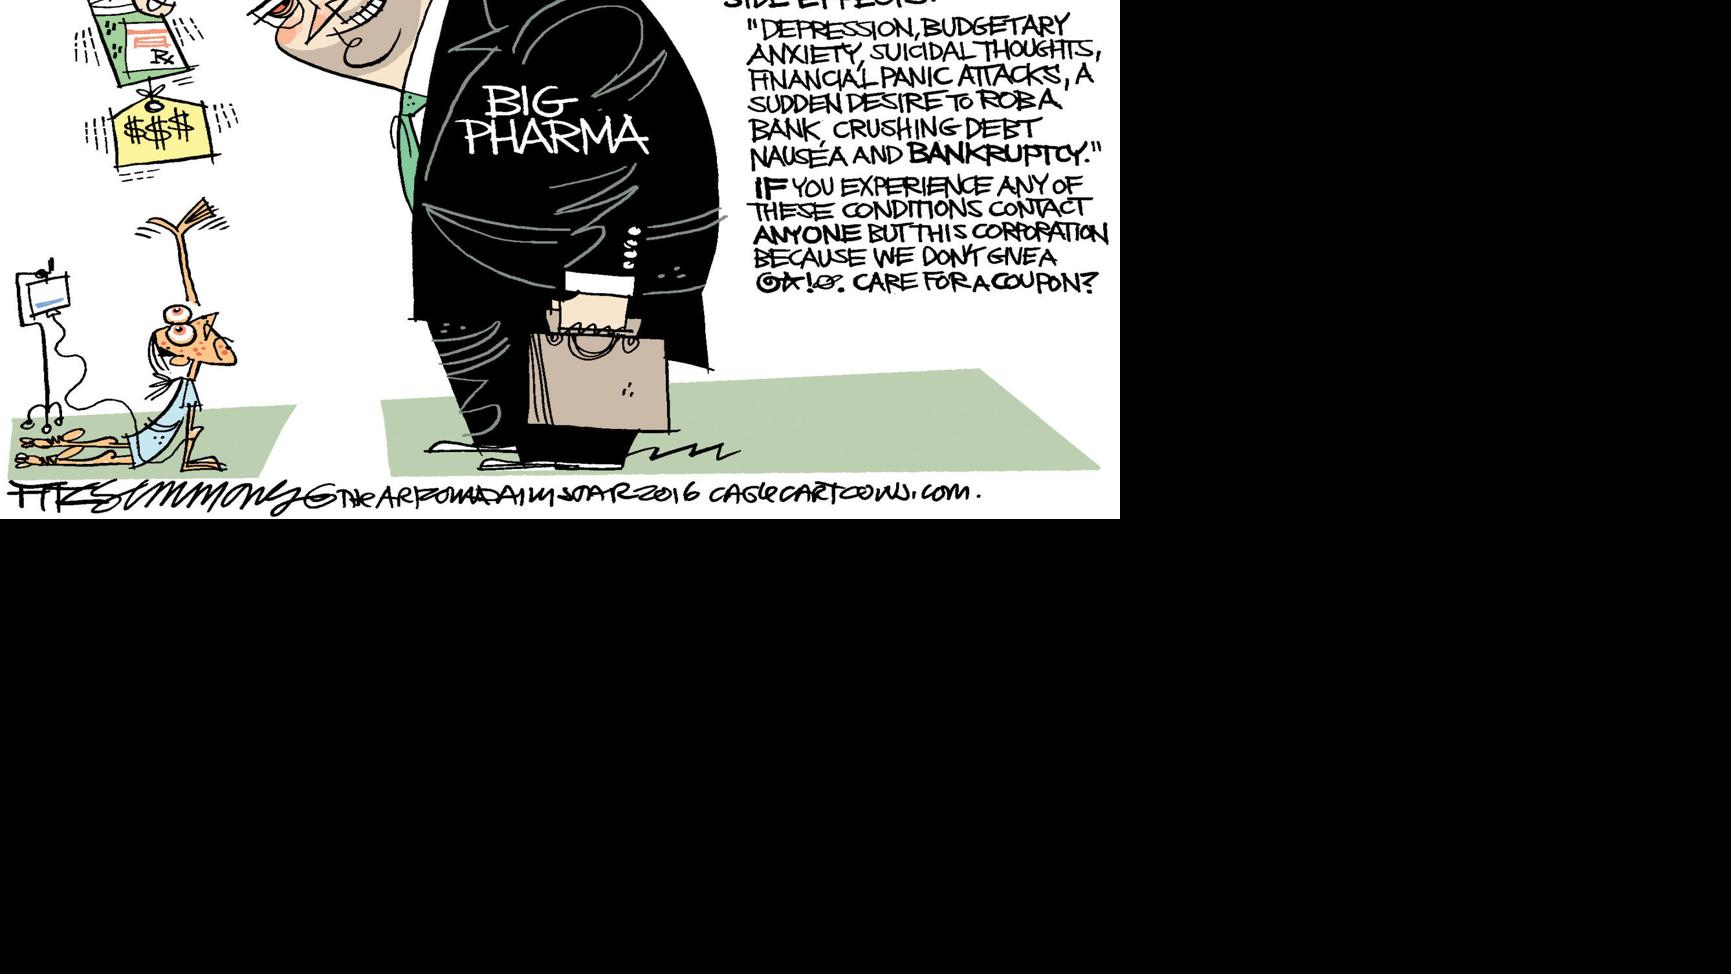 Daily Fitz Cartoon: Big Pharma | Fitz | tucson.com